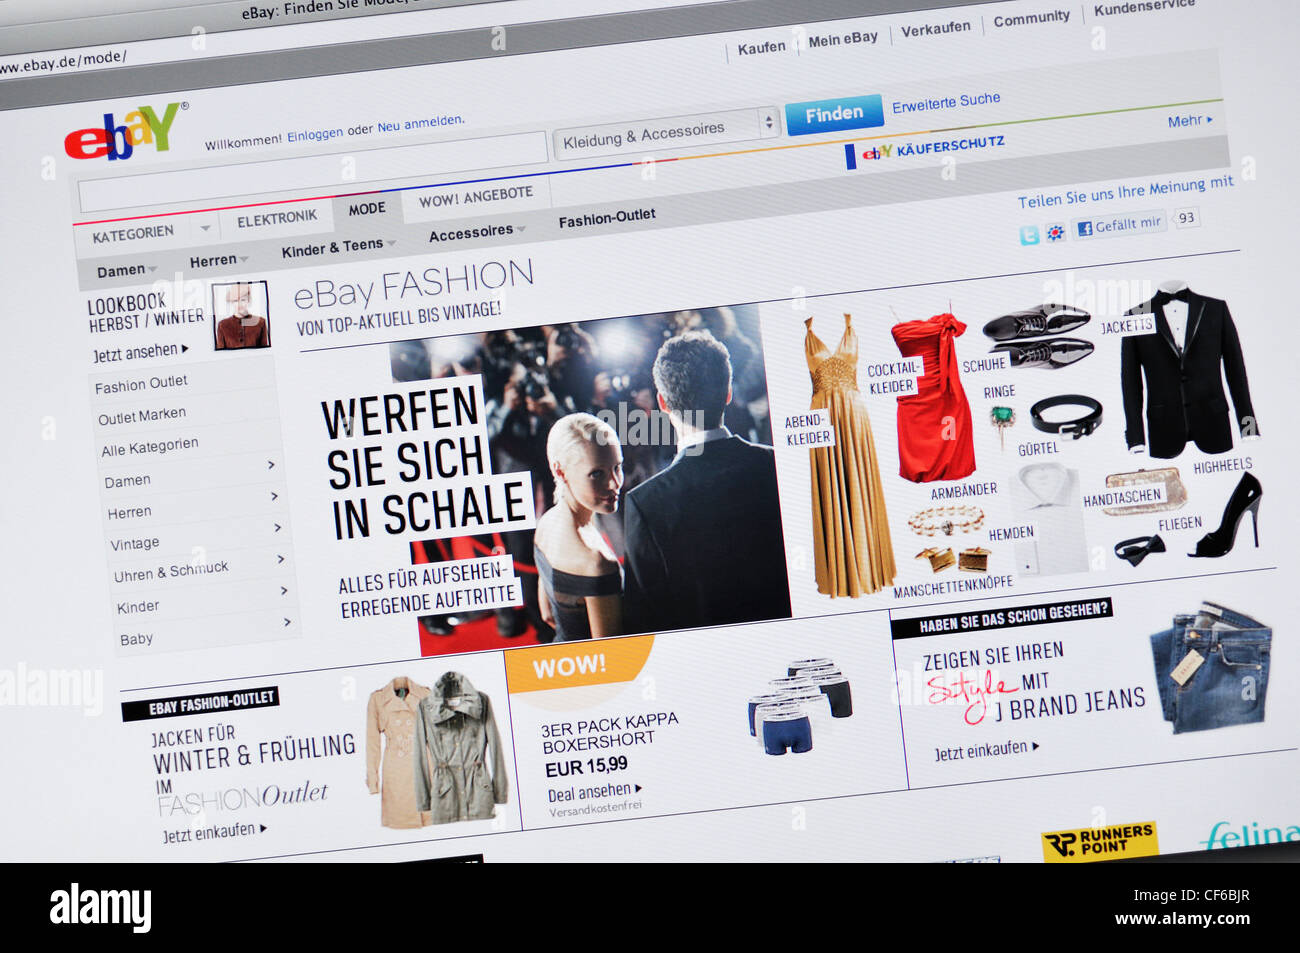 Ebay website - German Stock Photo